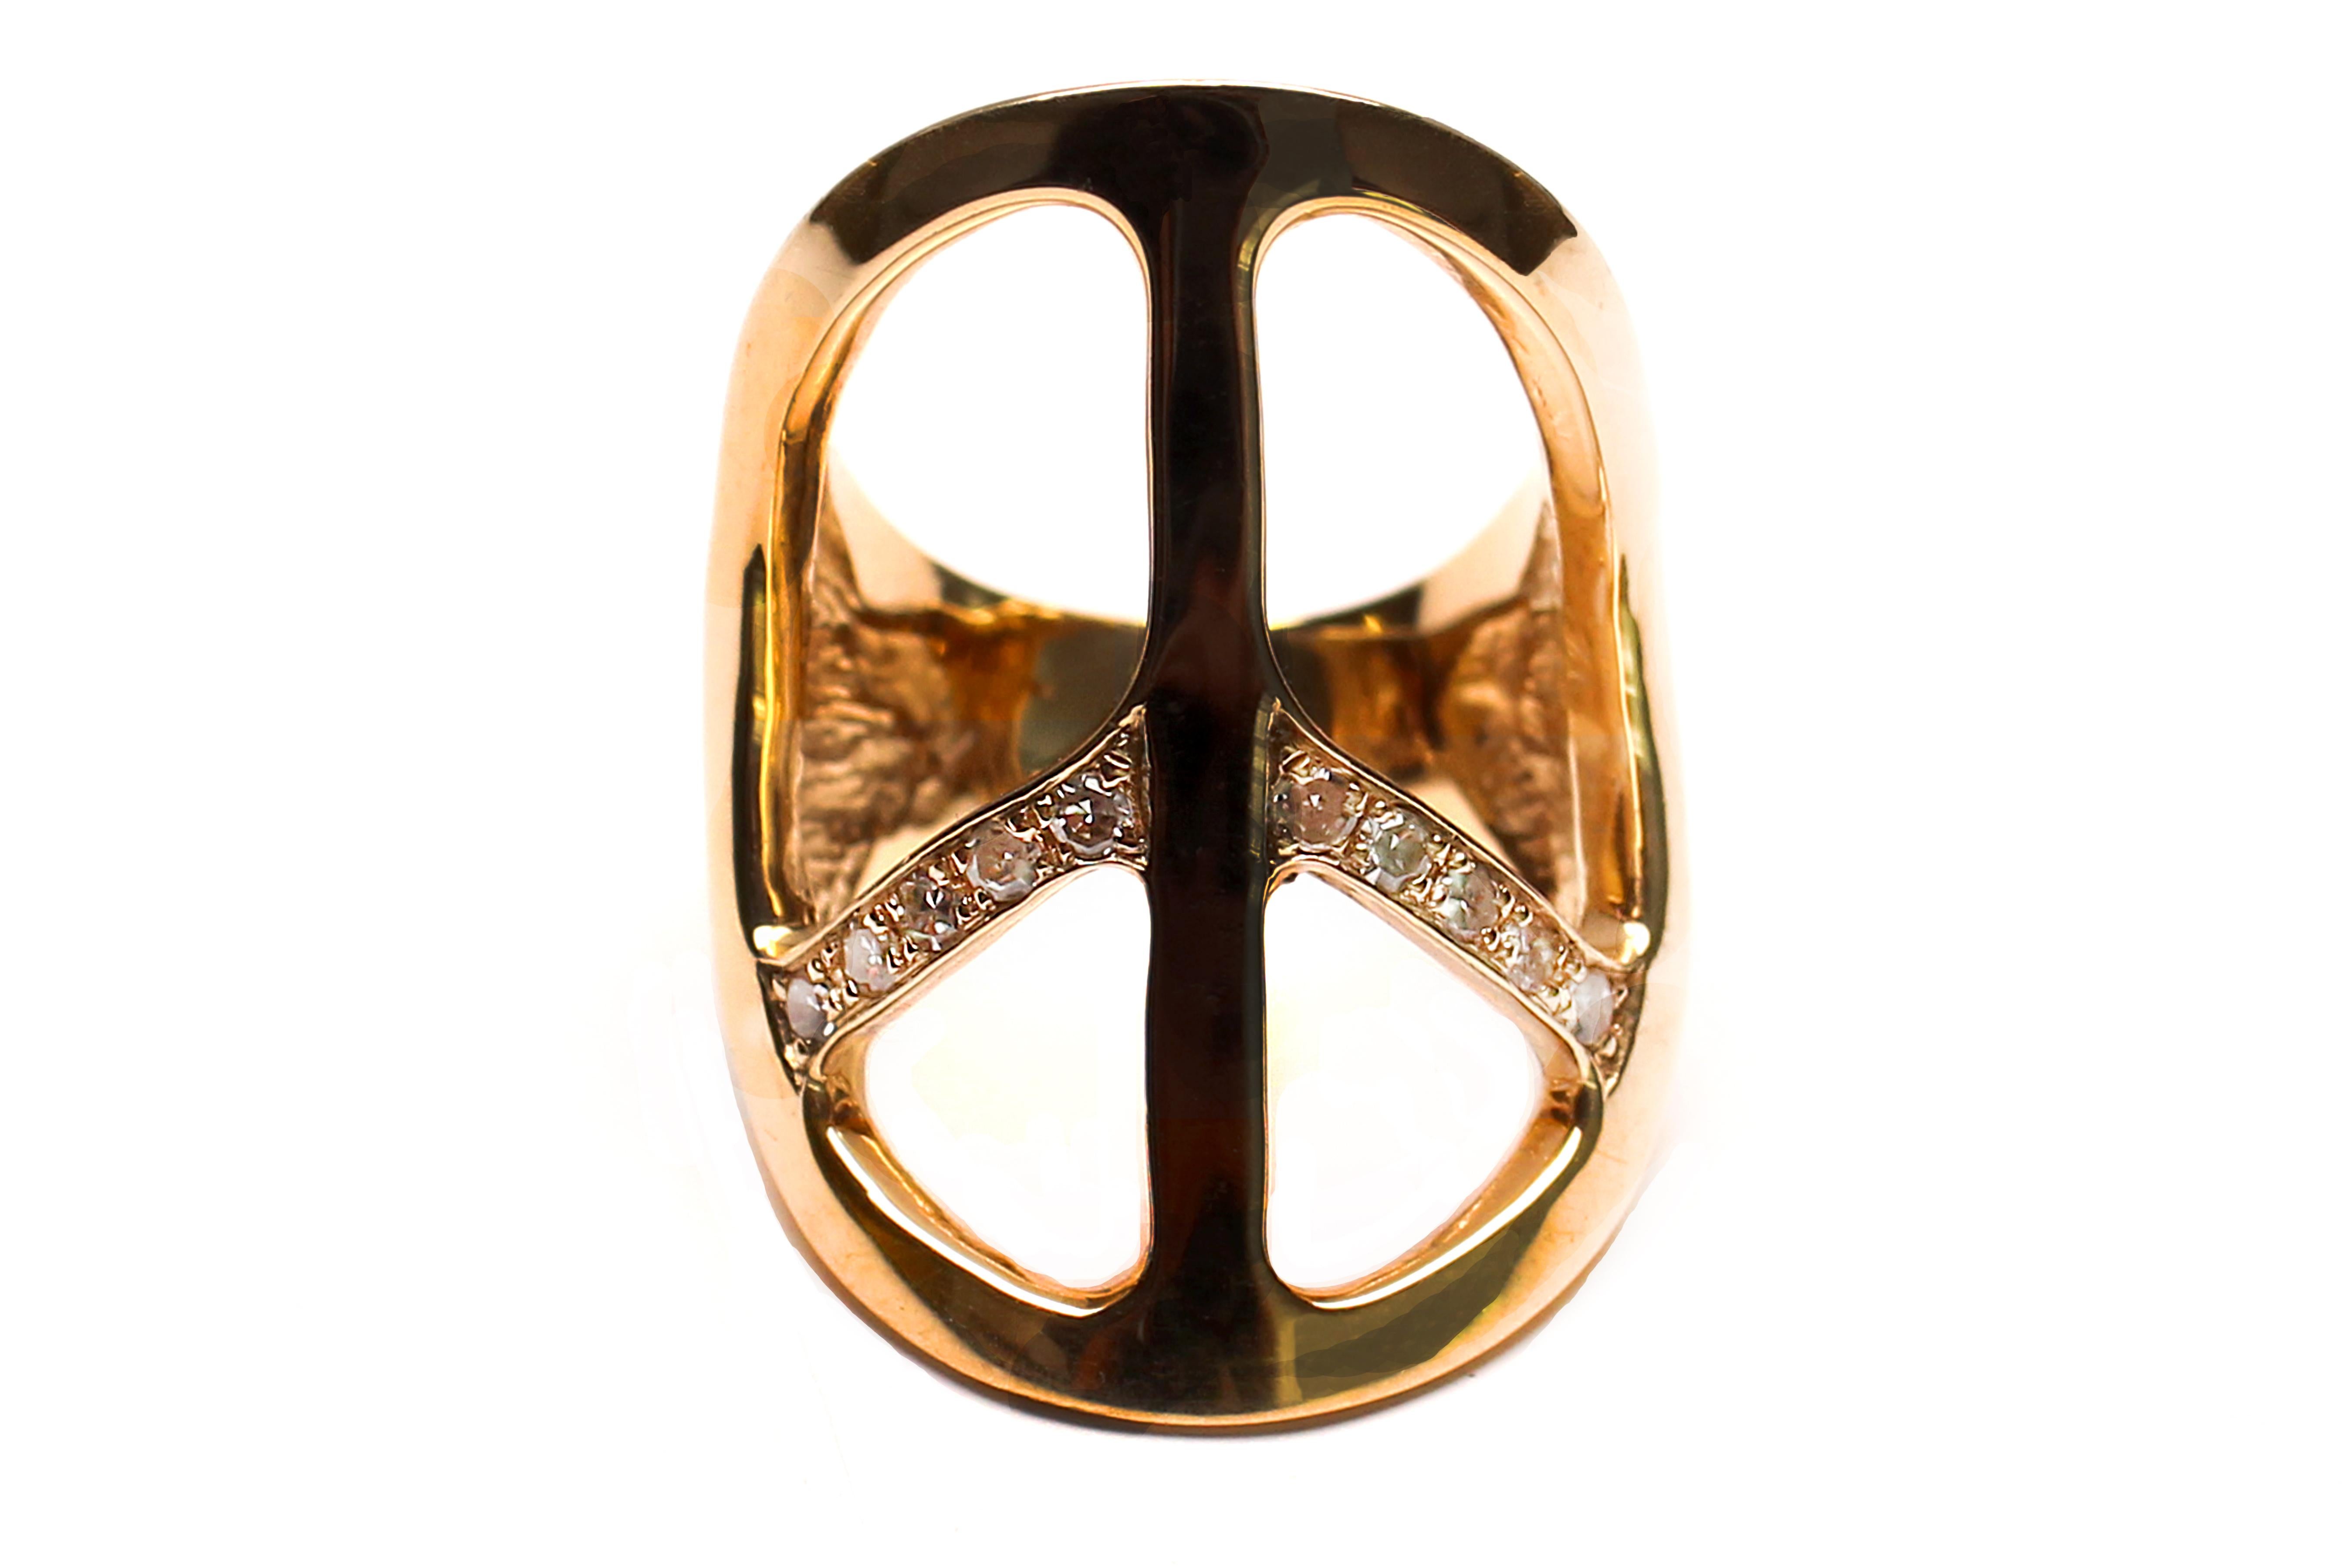 Contemporary Clarissa Bronfman 14 Karat Gold and Diamond Peace Ring